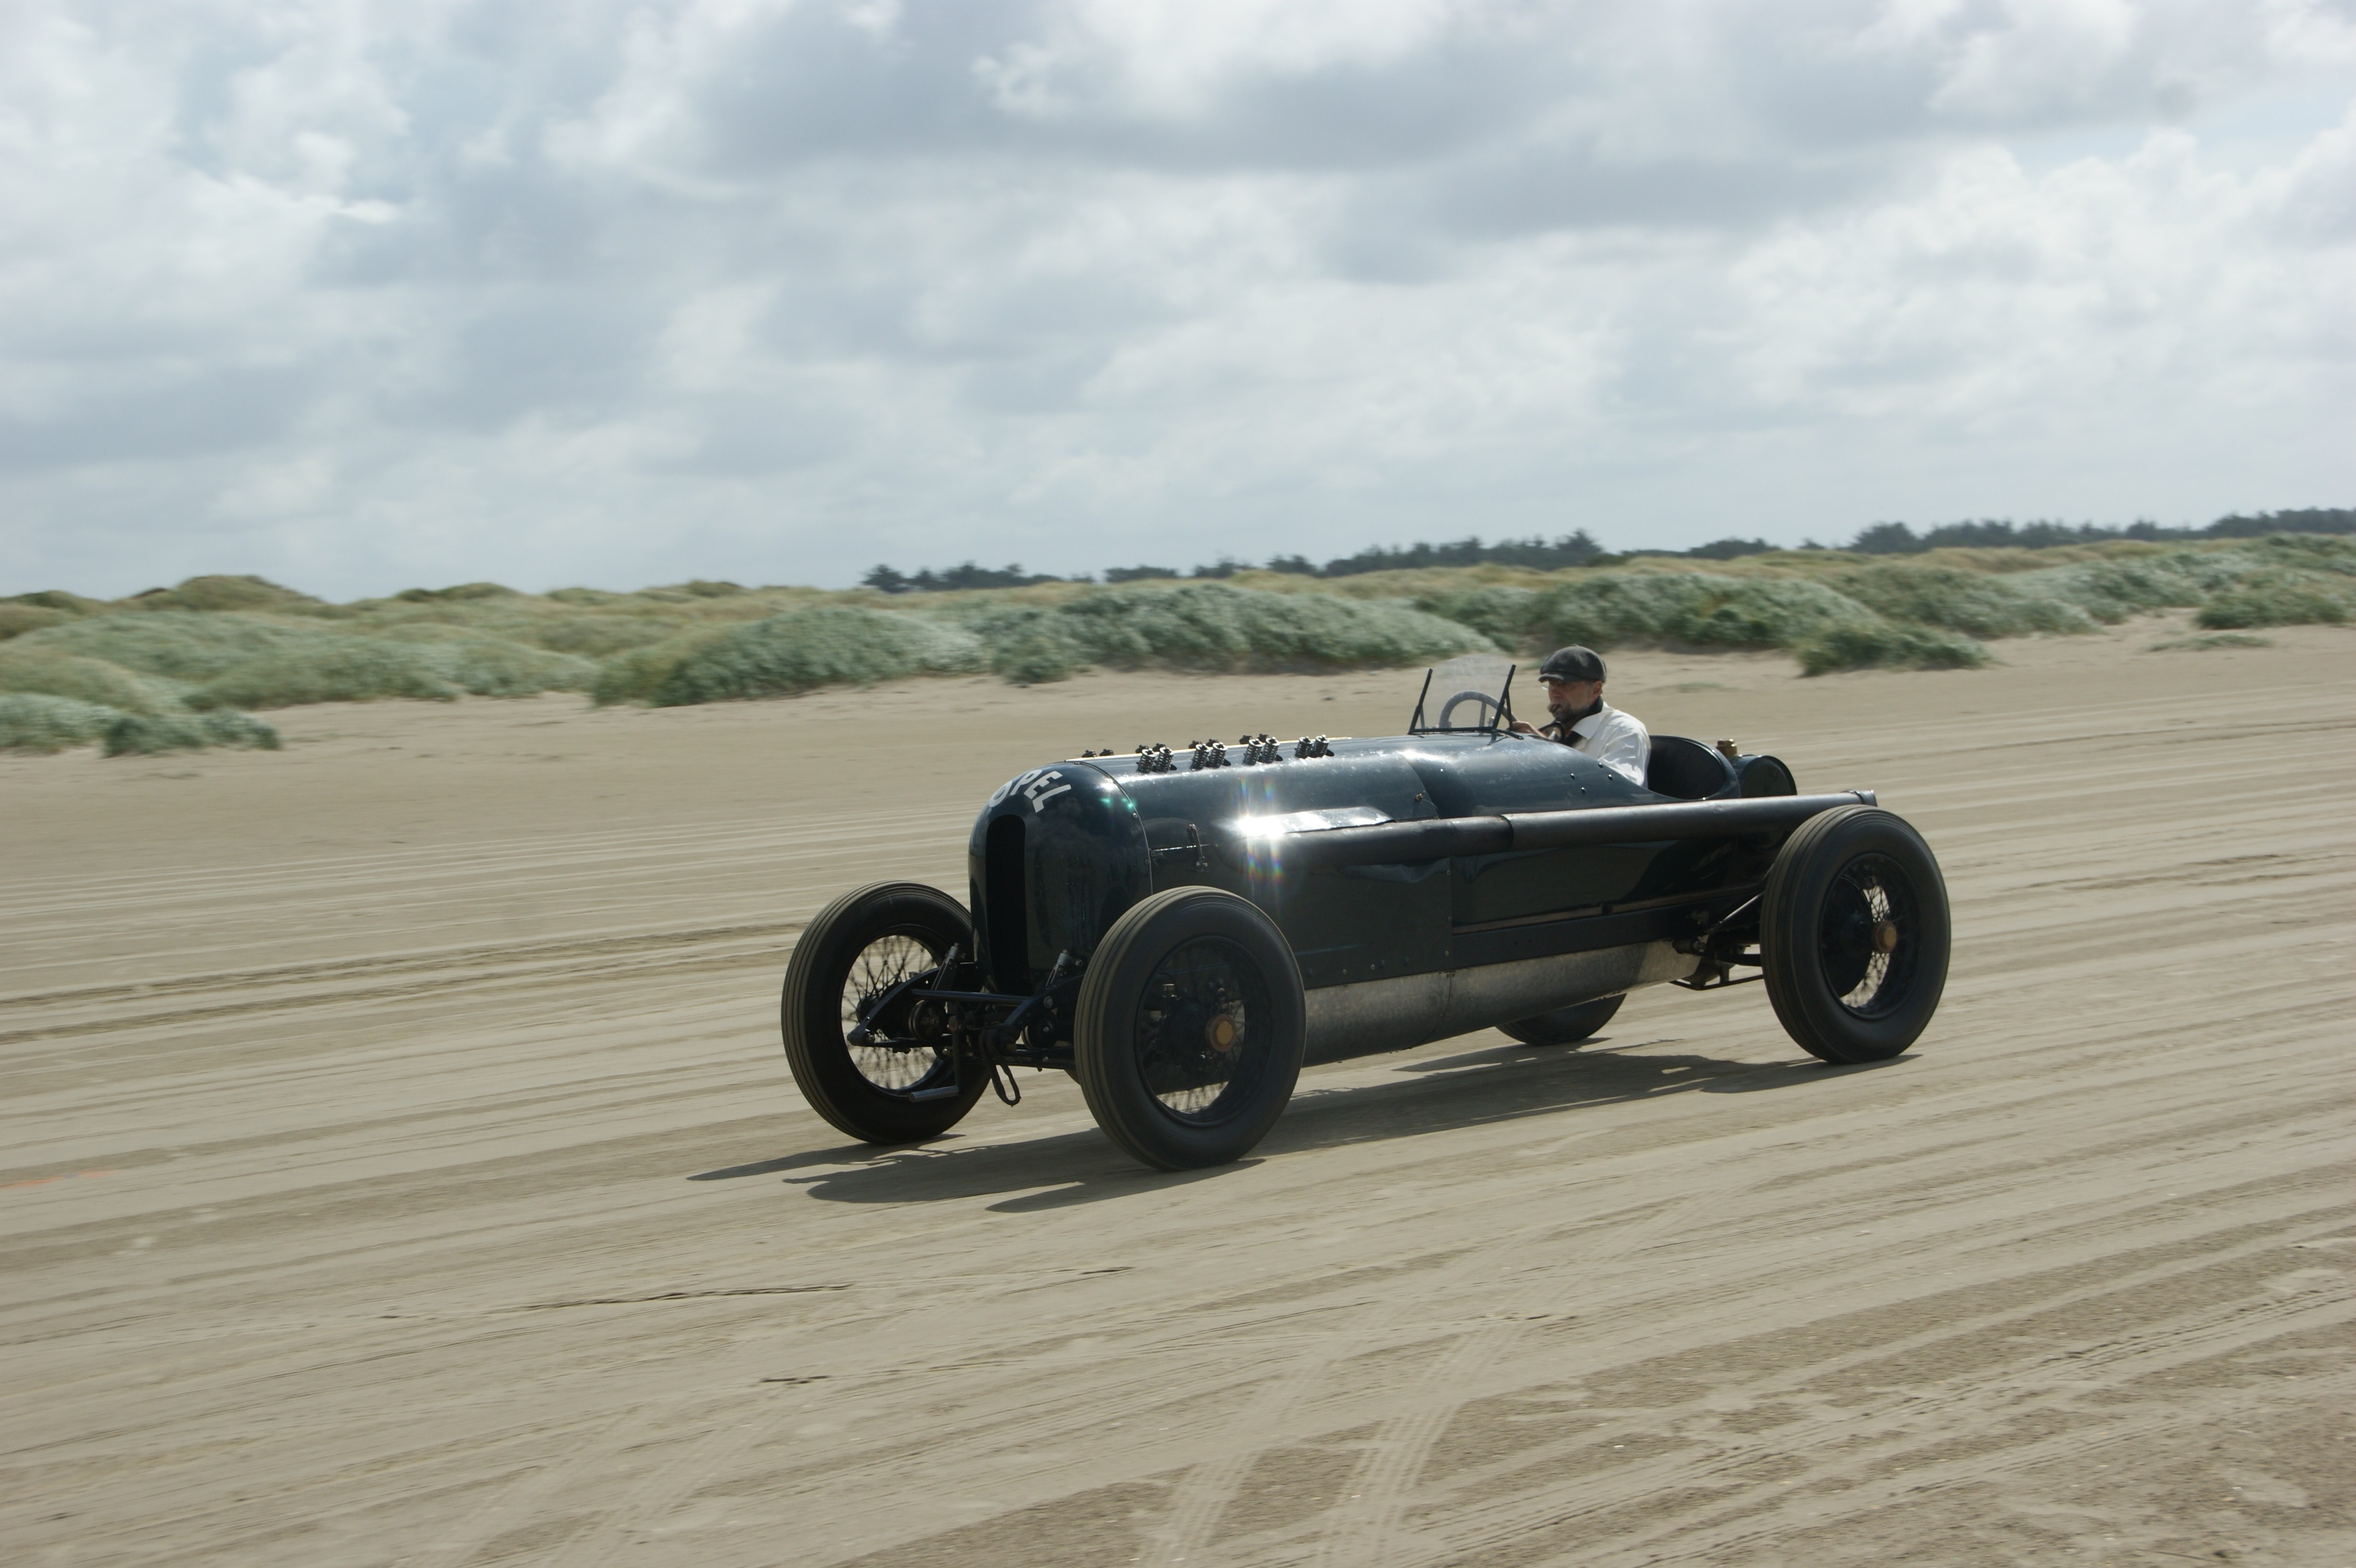 Green Monster εν Δράσει: Η Opel  Classic συμμετέχει με αγωνιστικό αυτοκίνητο 12.3L του 1914